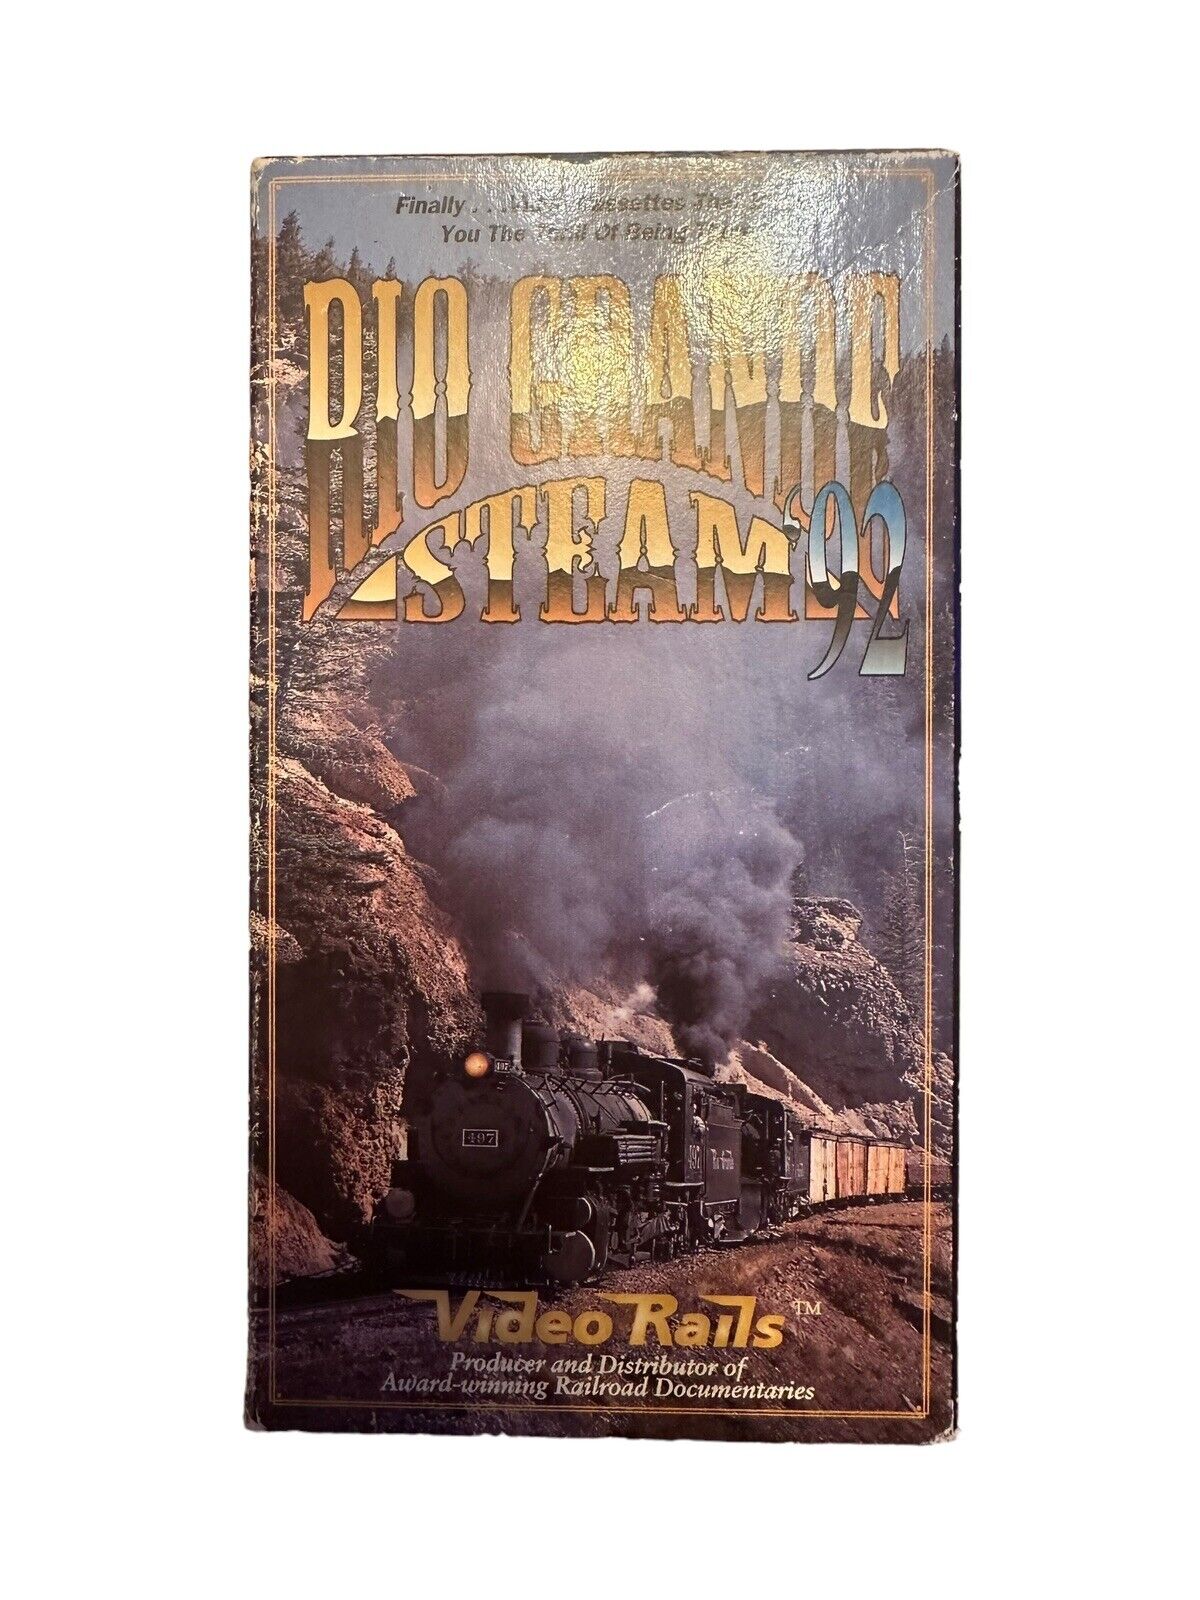 Rare VINTAGE RAILS Production Rio Grande Steam 92 Two Tape Set